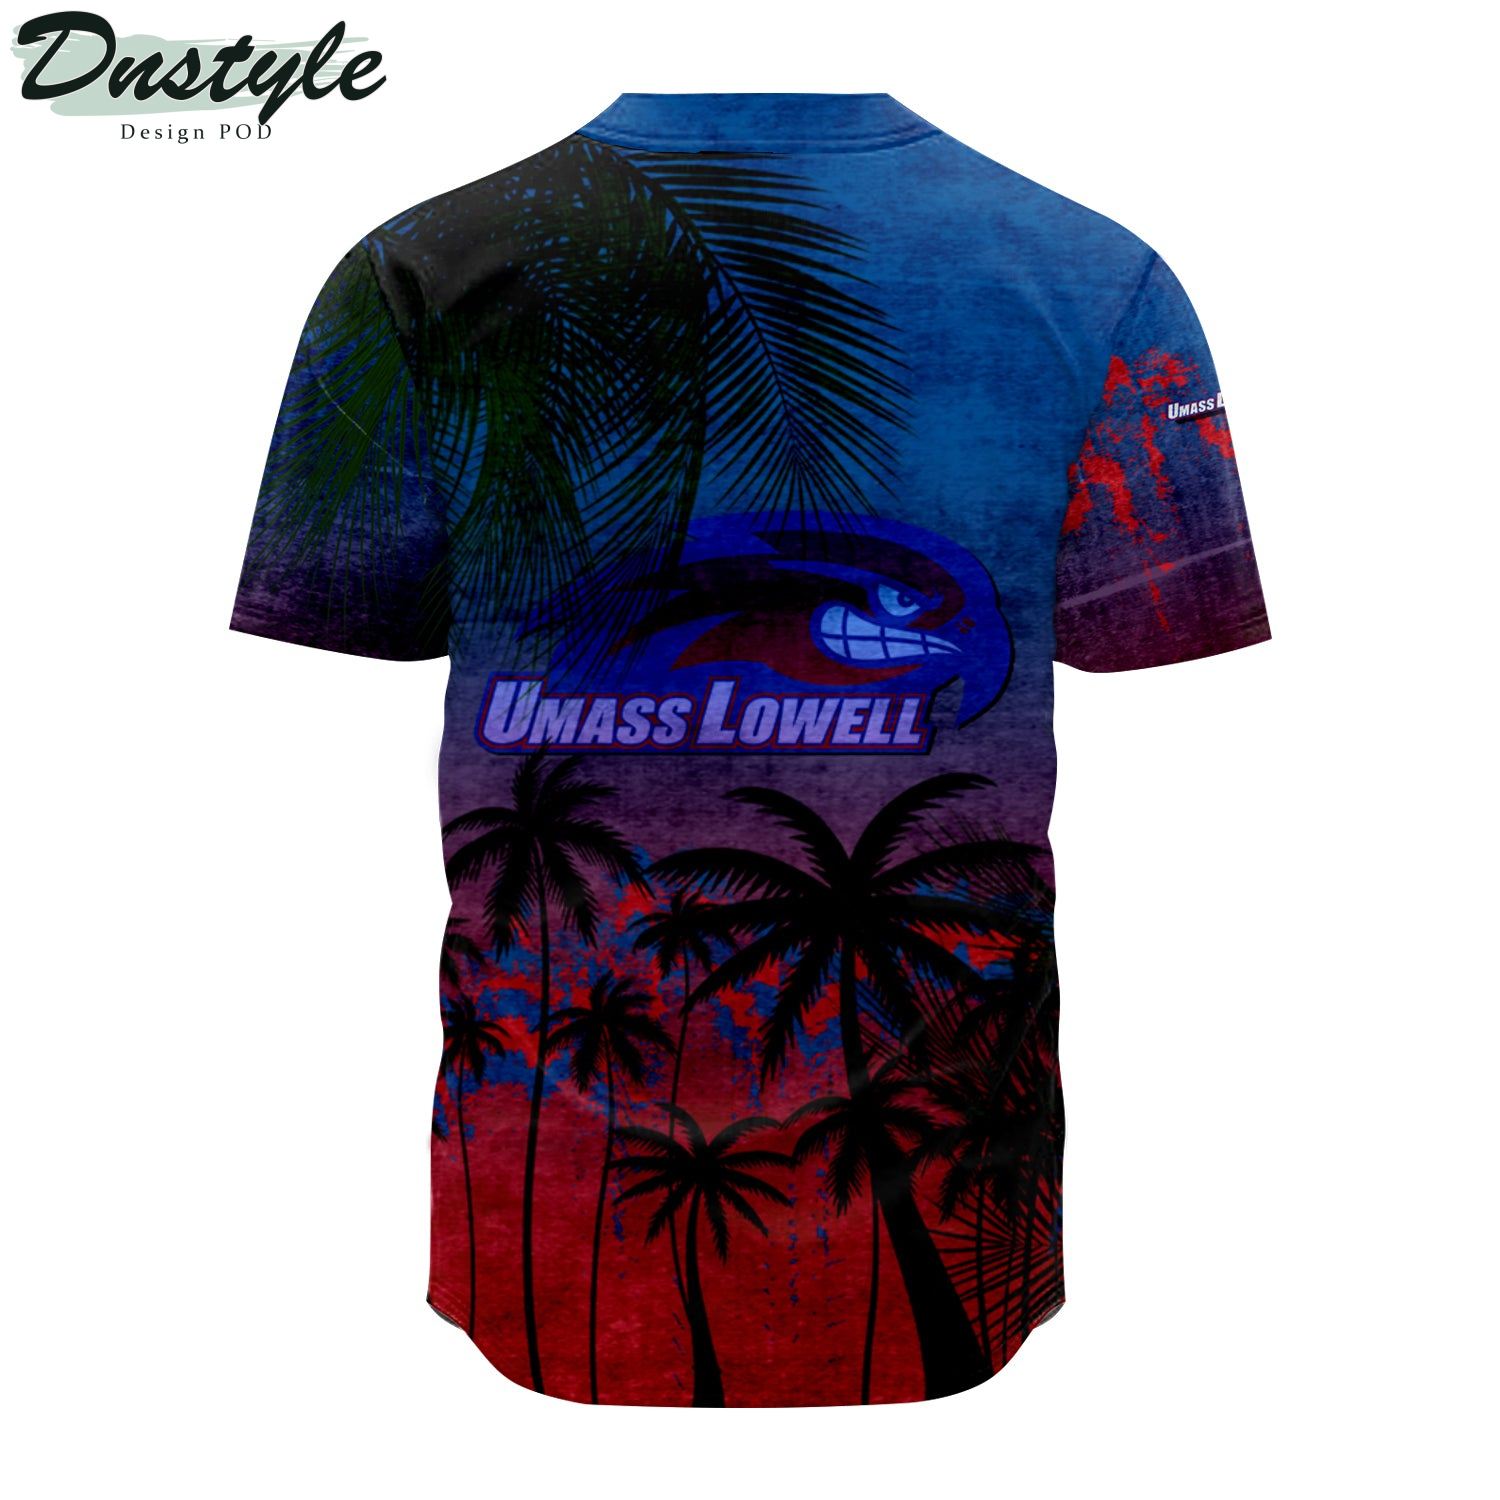 UMass Lowell River Hawks Baseball Jersey Coconut Tree Tropical Grunge